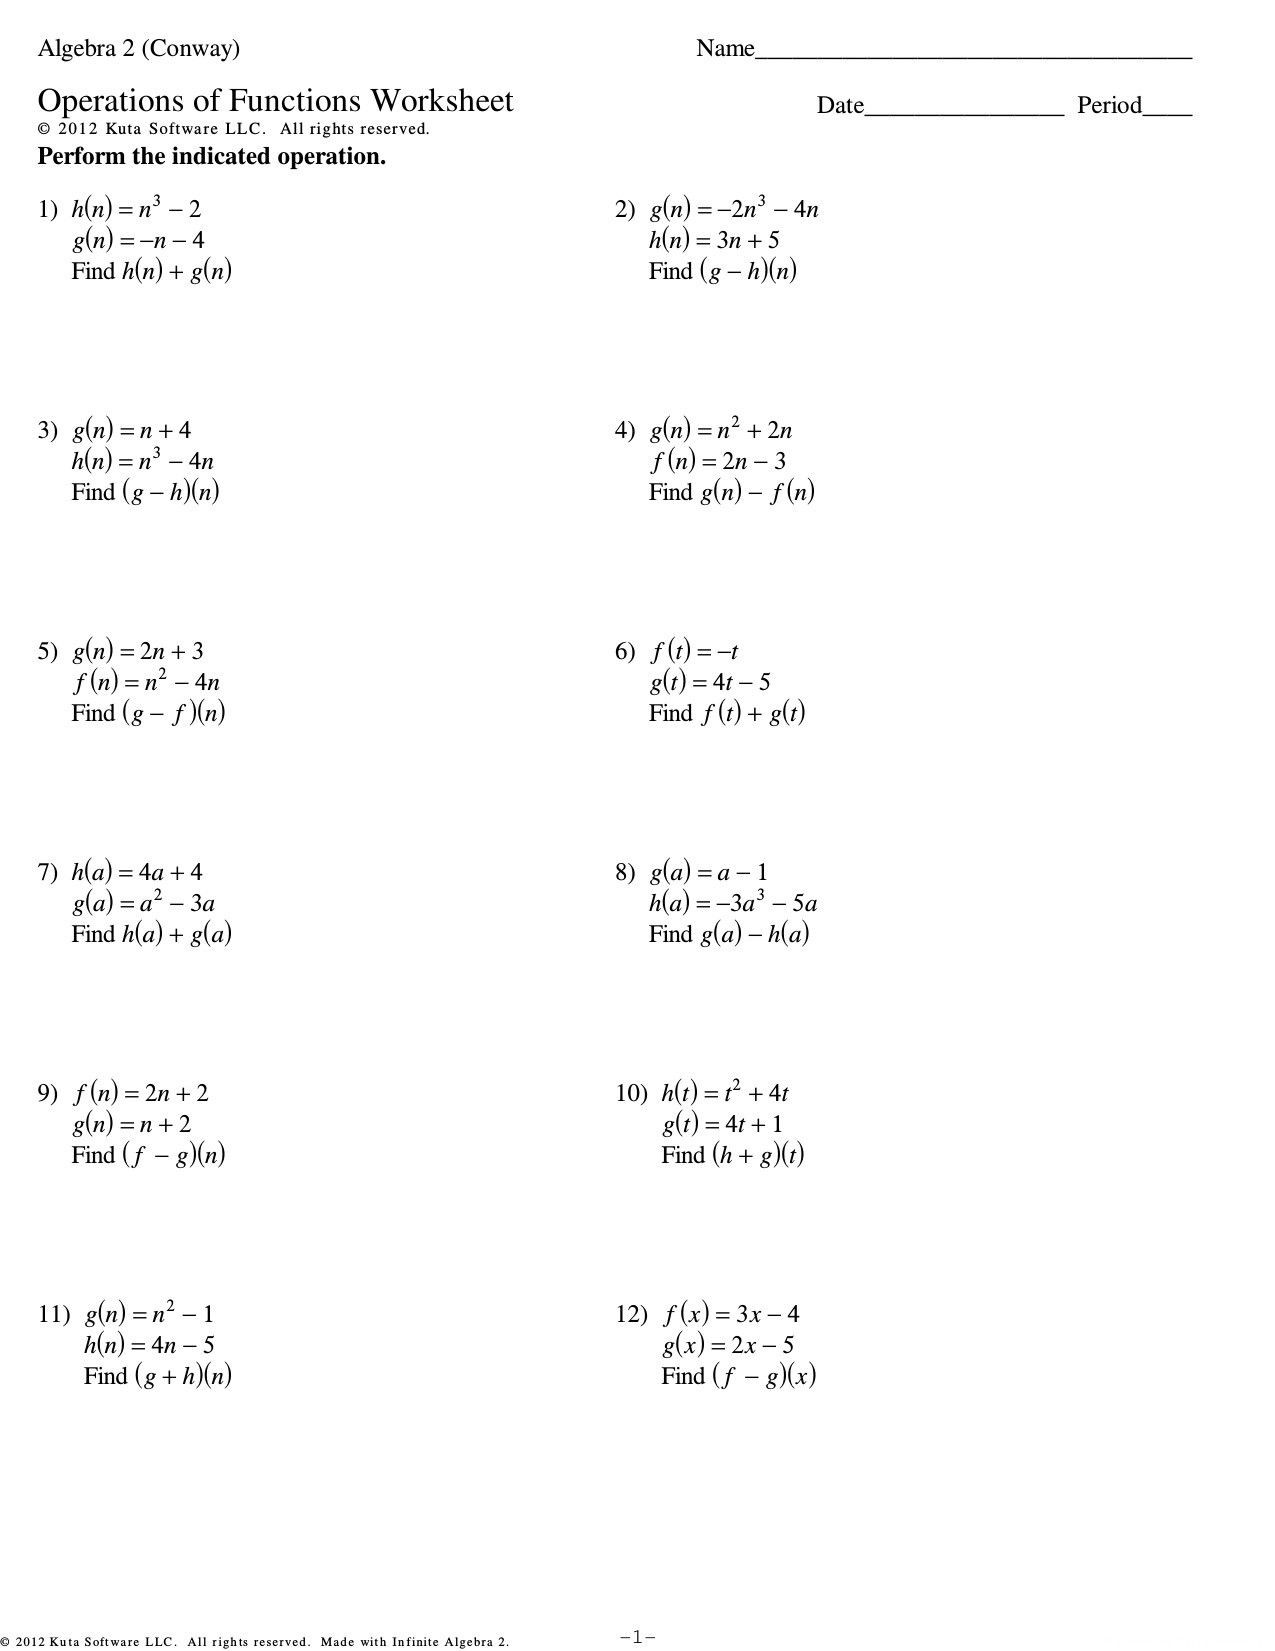 Evaluating Functions Worksheet Algebra 1 Multiplying Fractions with Different Denominators Worksheet